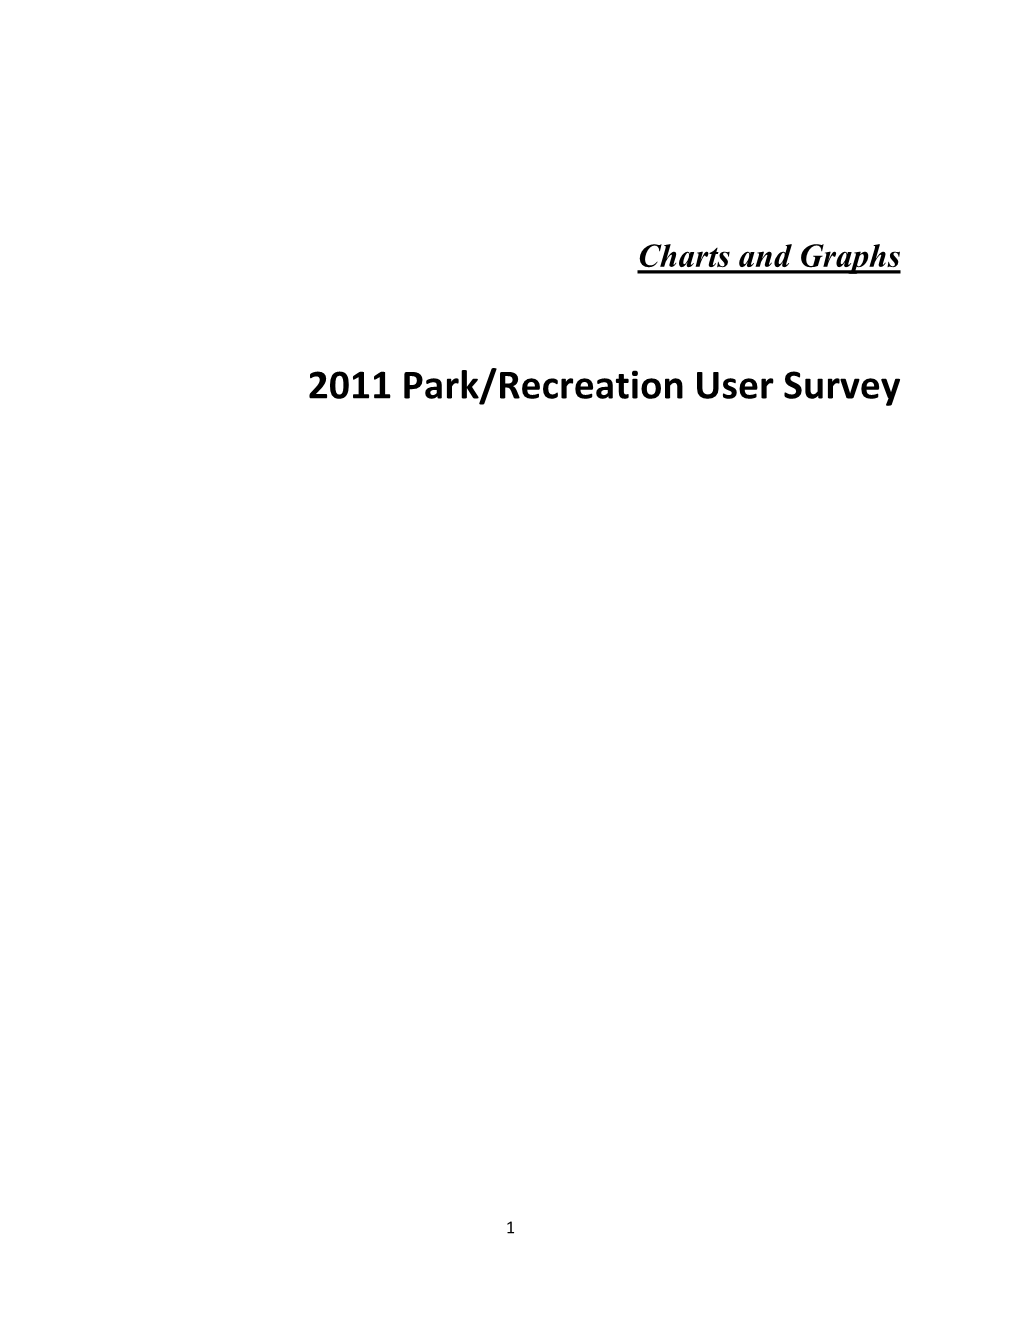 2011 Park/Recreation User Survey